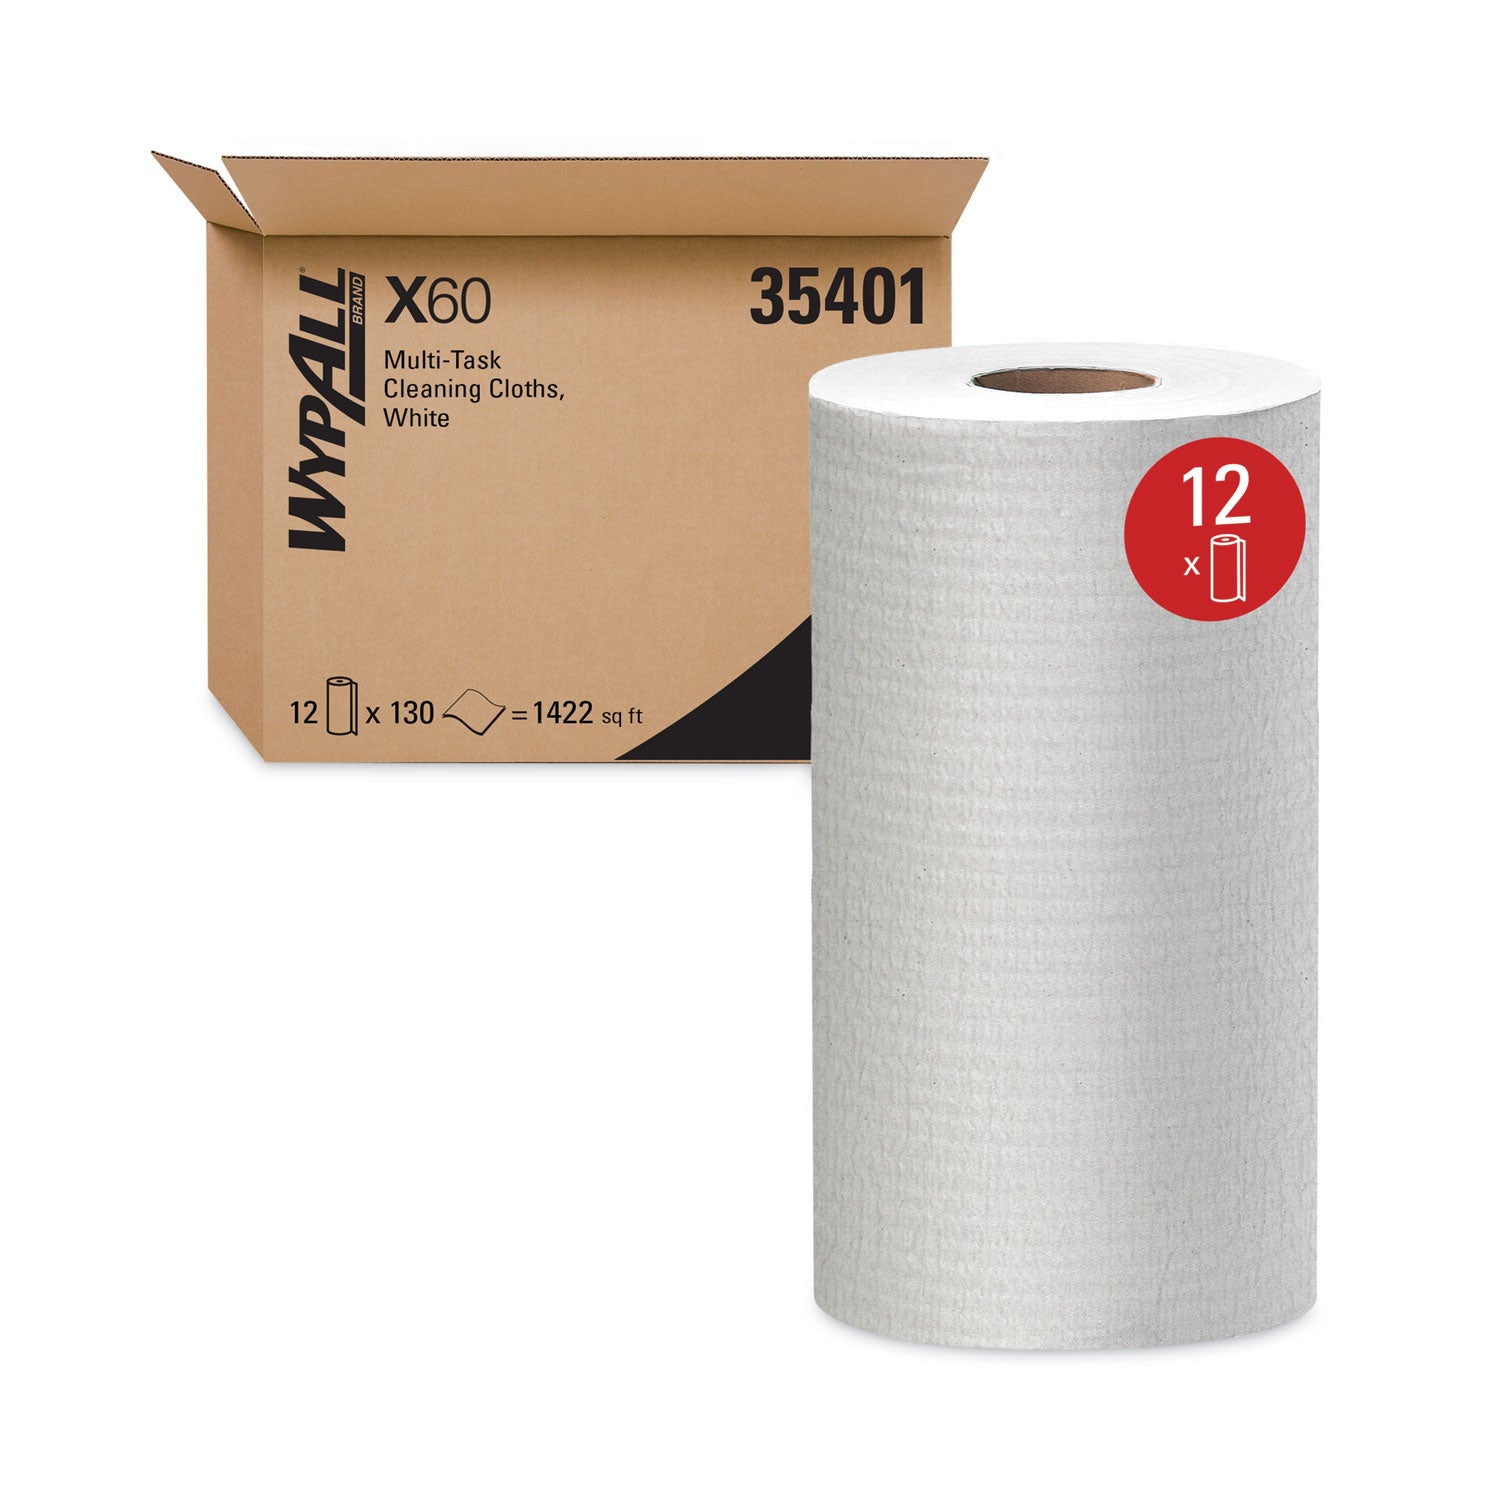 General Clean X60 Cloths, Small Roll, 9.8 x 13.4, White, 130/Roll, 12 Rolls/Carton - 